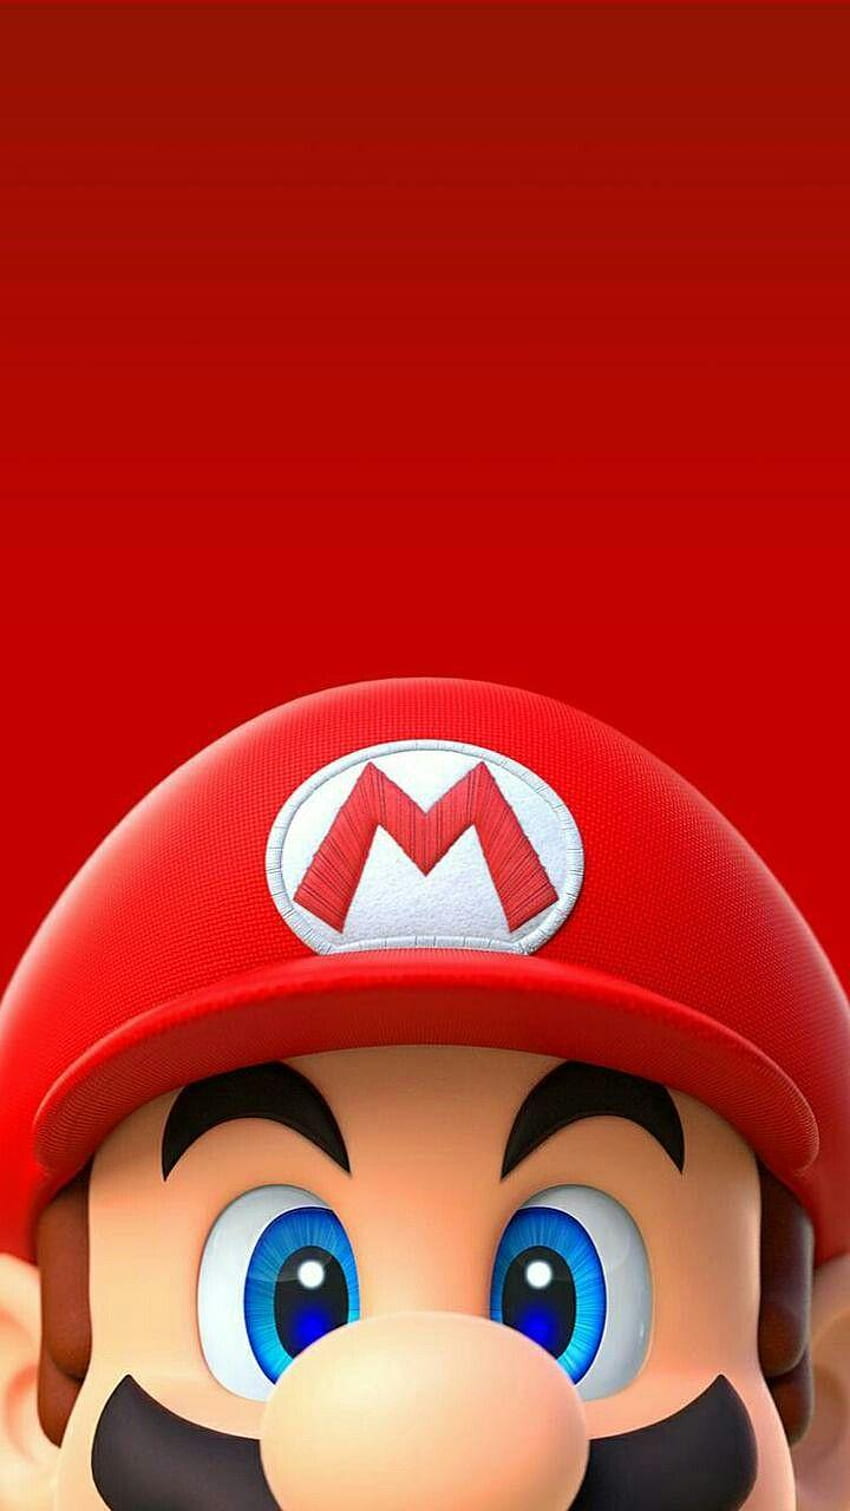 Inspirational Super Mario Phone Wallpaper  Super mario world Fondos de  mario bros Fondos de pantalla de juegos